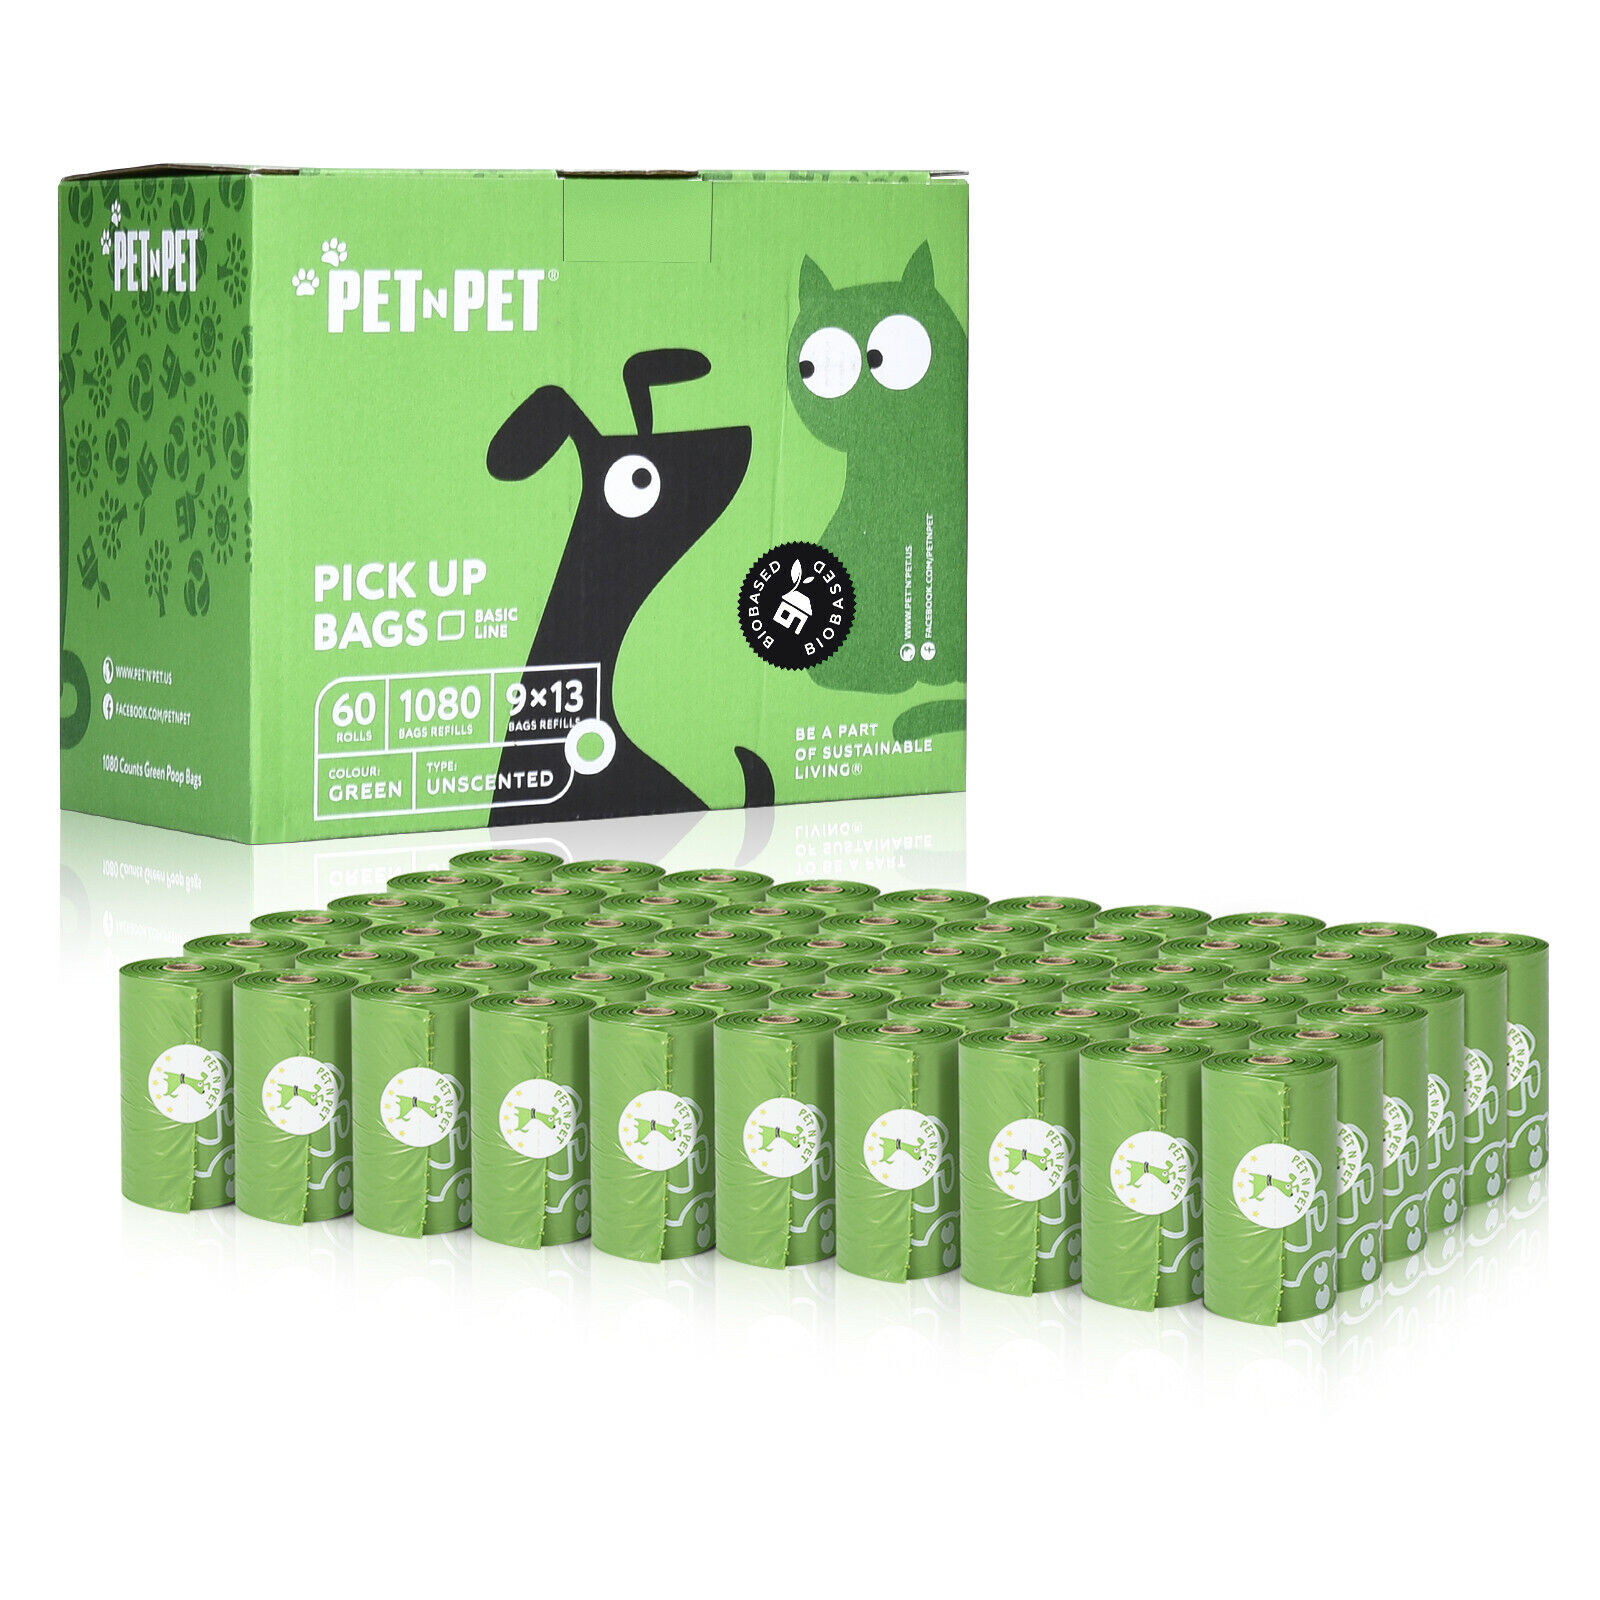 PET N PET Dog Poop Bags Pick up Pet Waste Bags 1080 Counts Green 9*13 large size